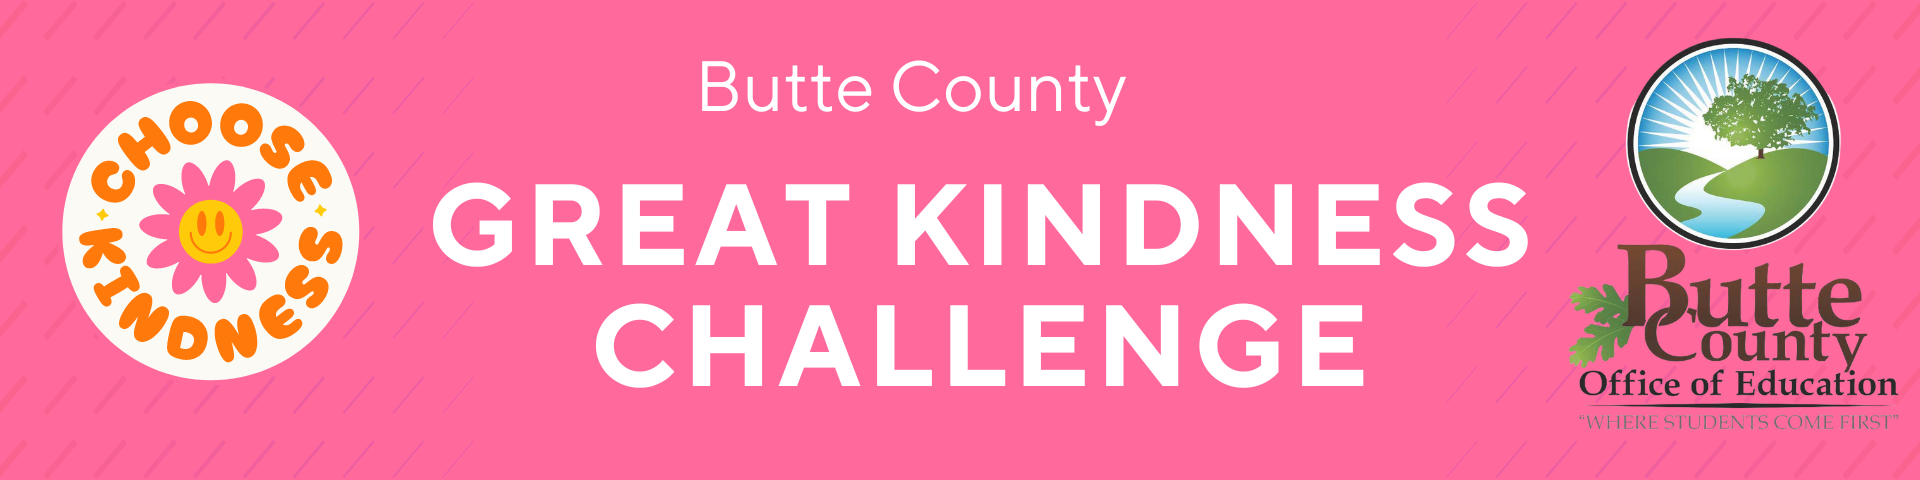 Great Kindness Challenge Header